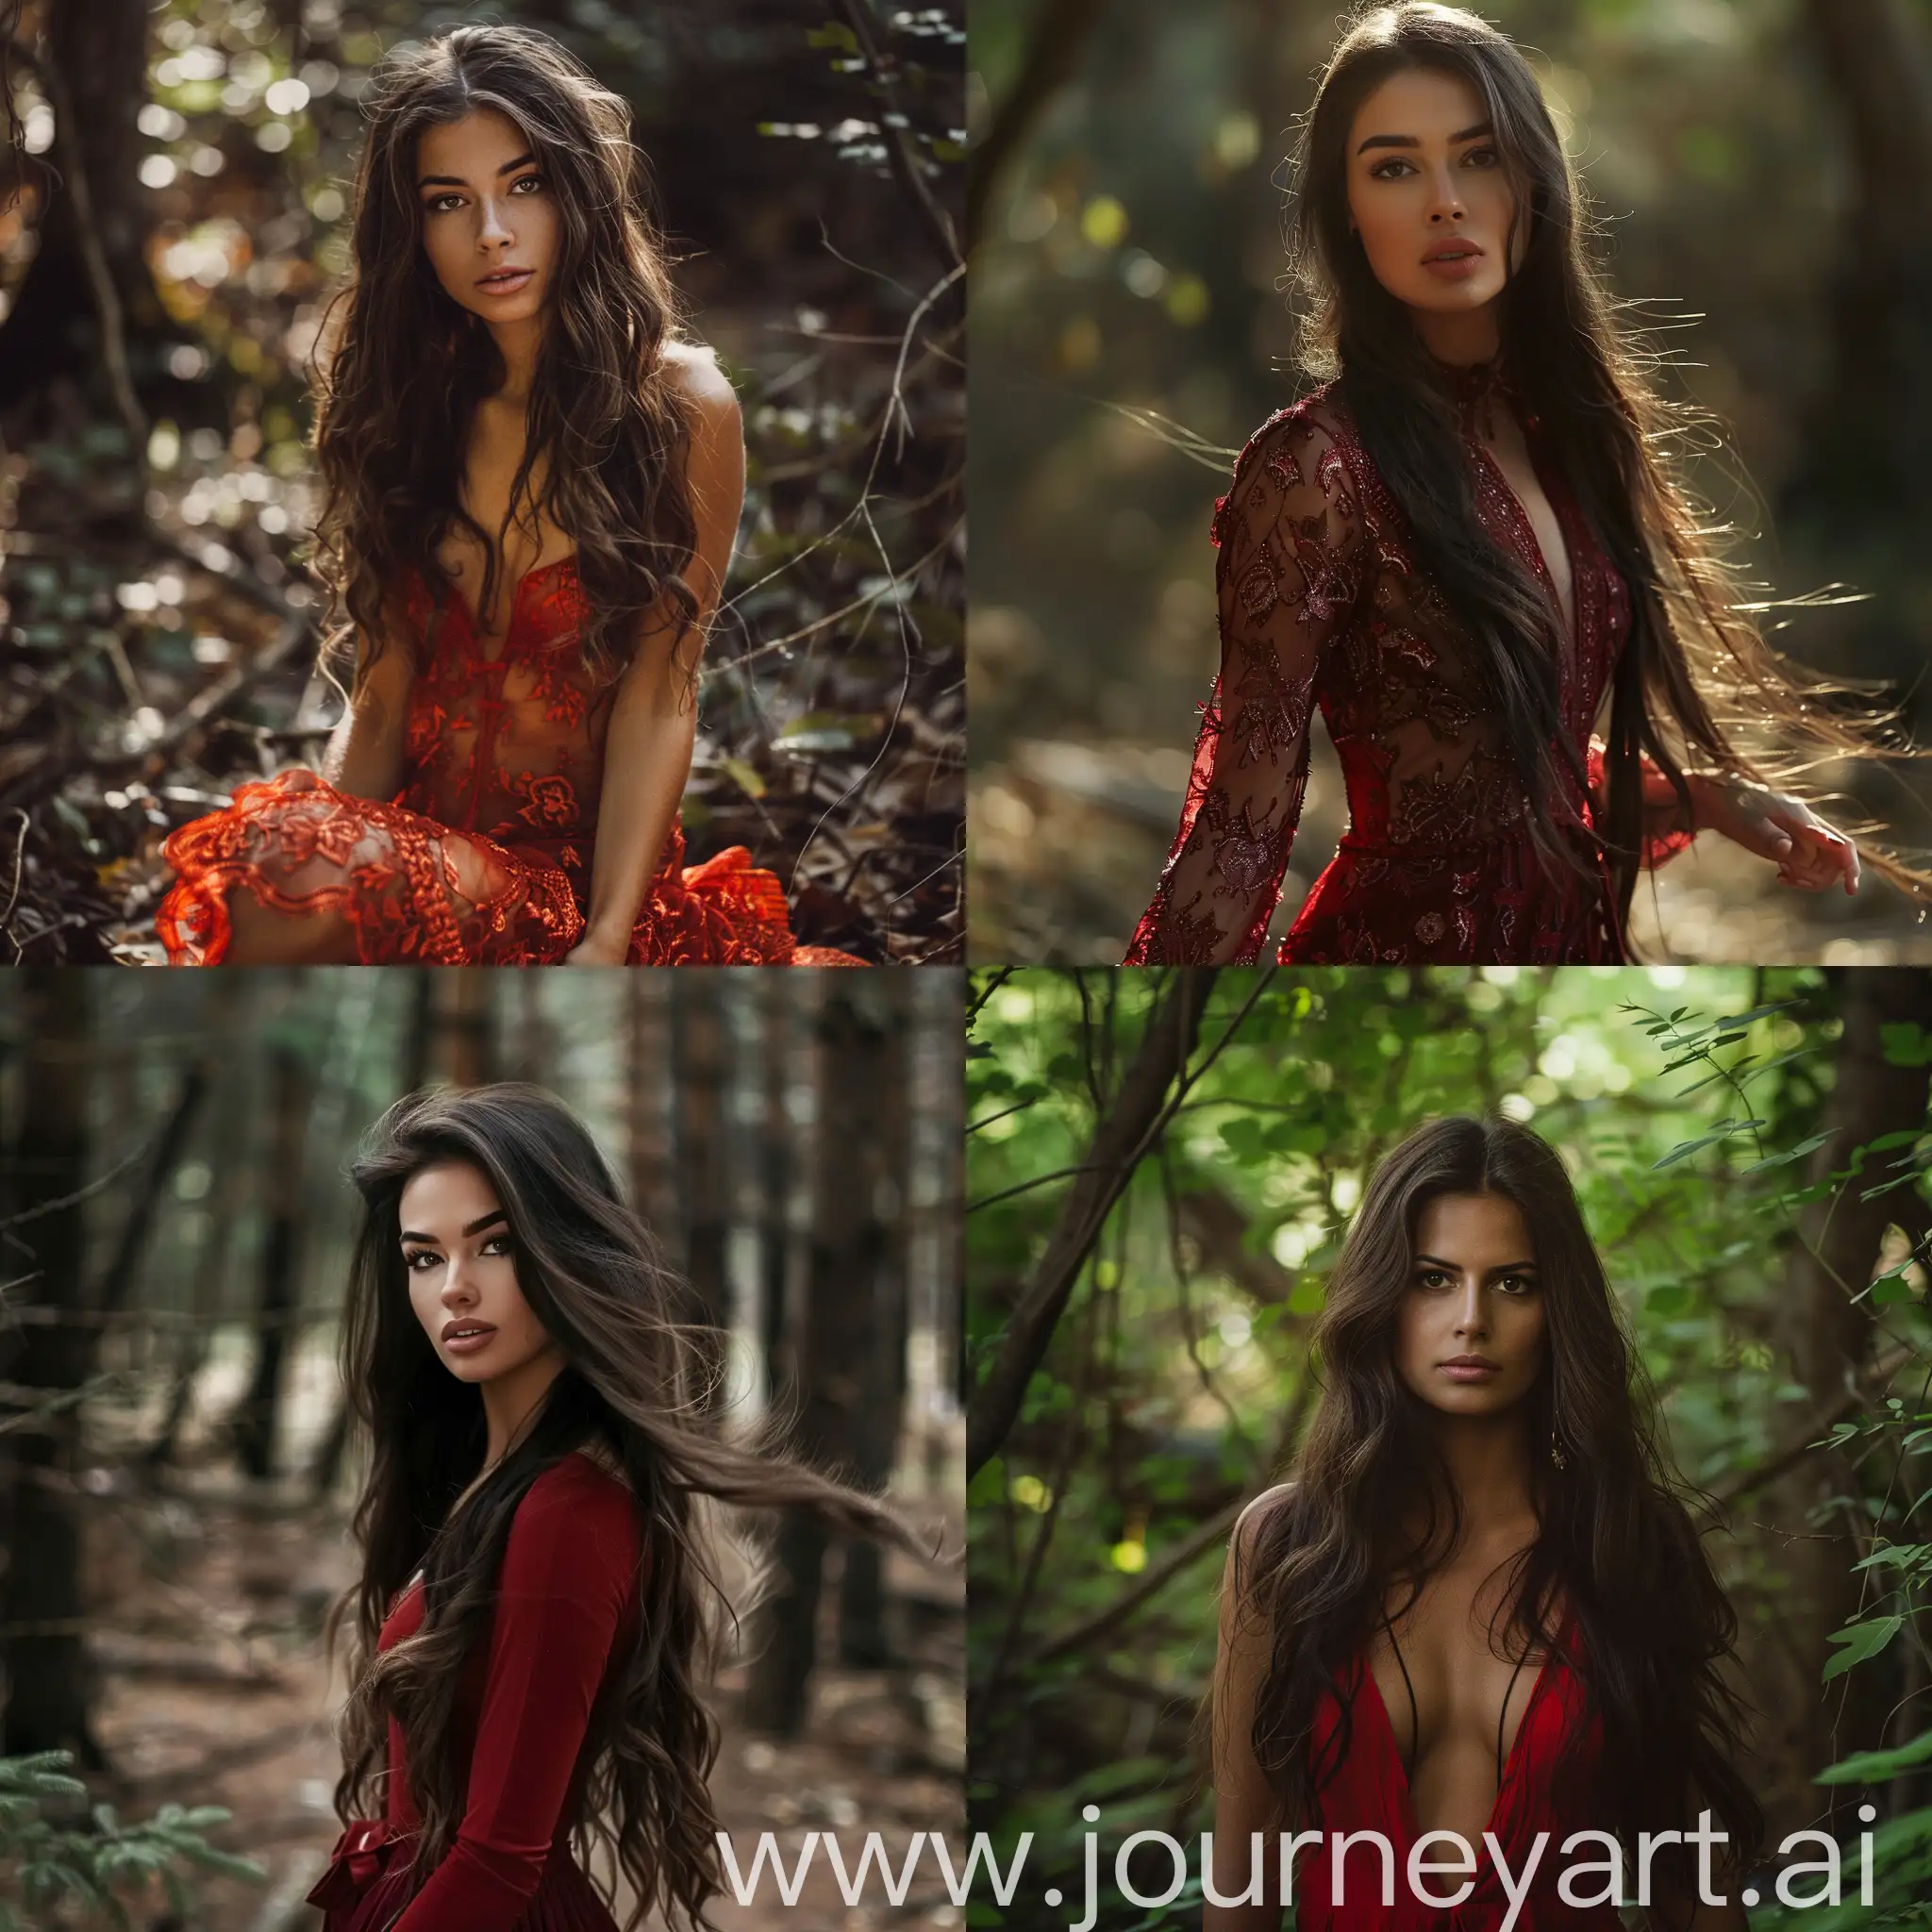 Elegant-Brunette-in-Red-Dress-Fashion-Photoshoot-in-Enchanting-Forest